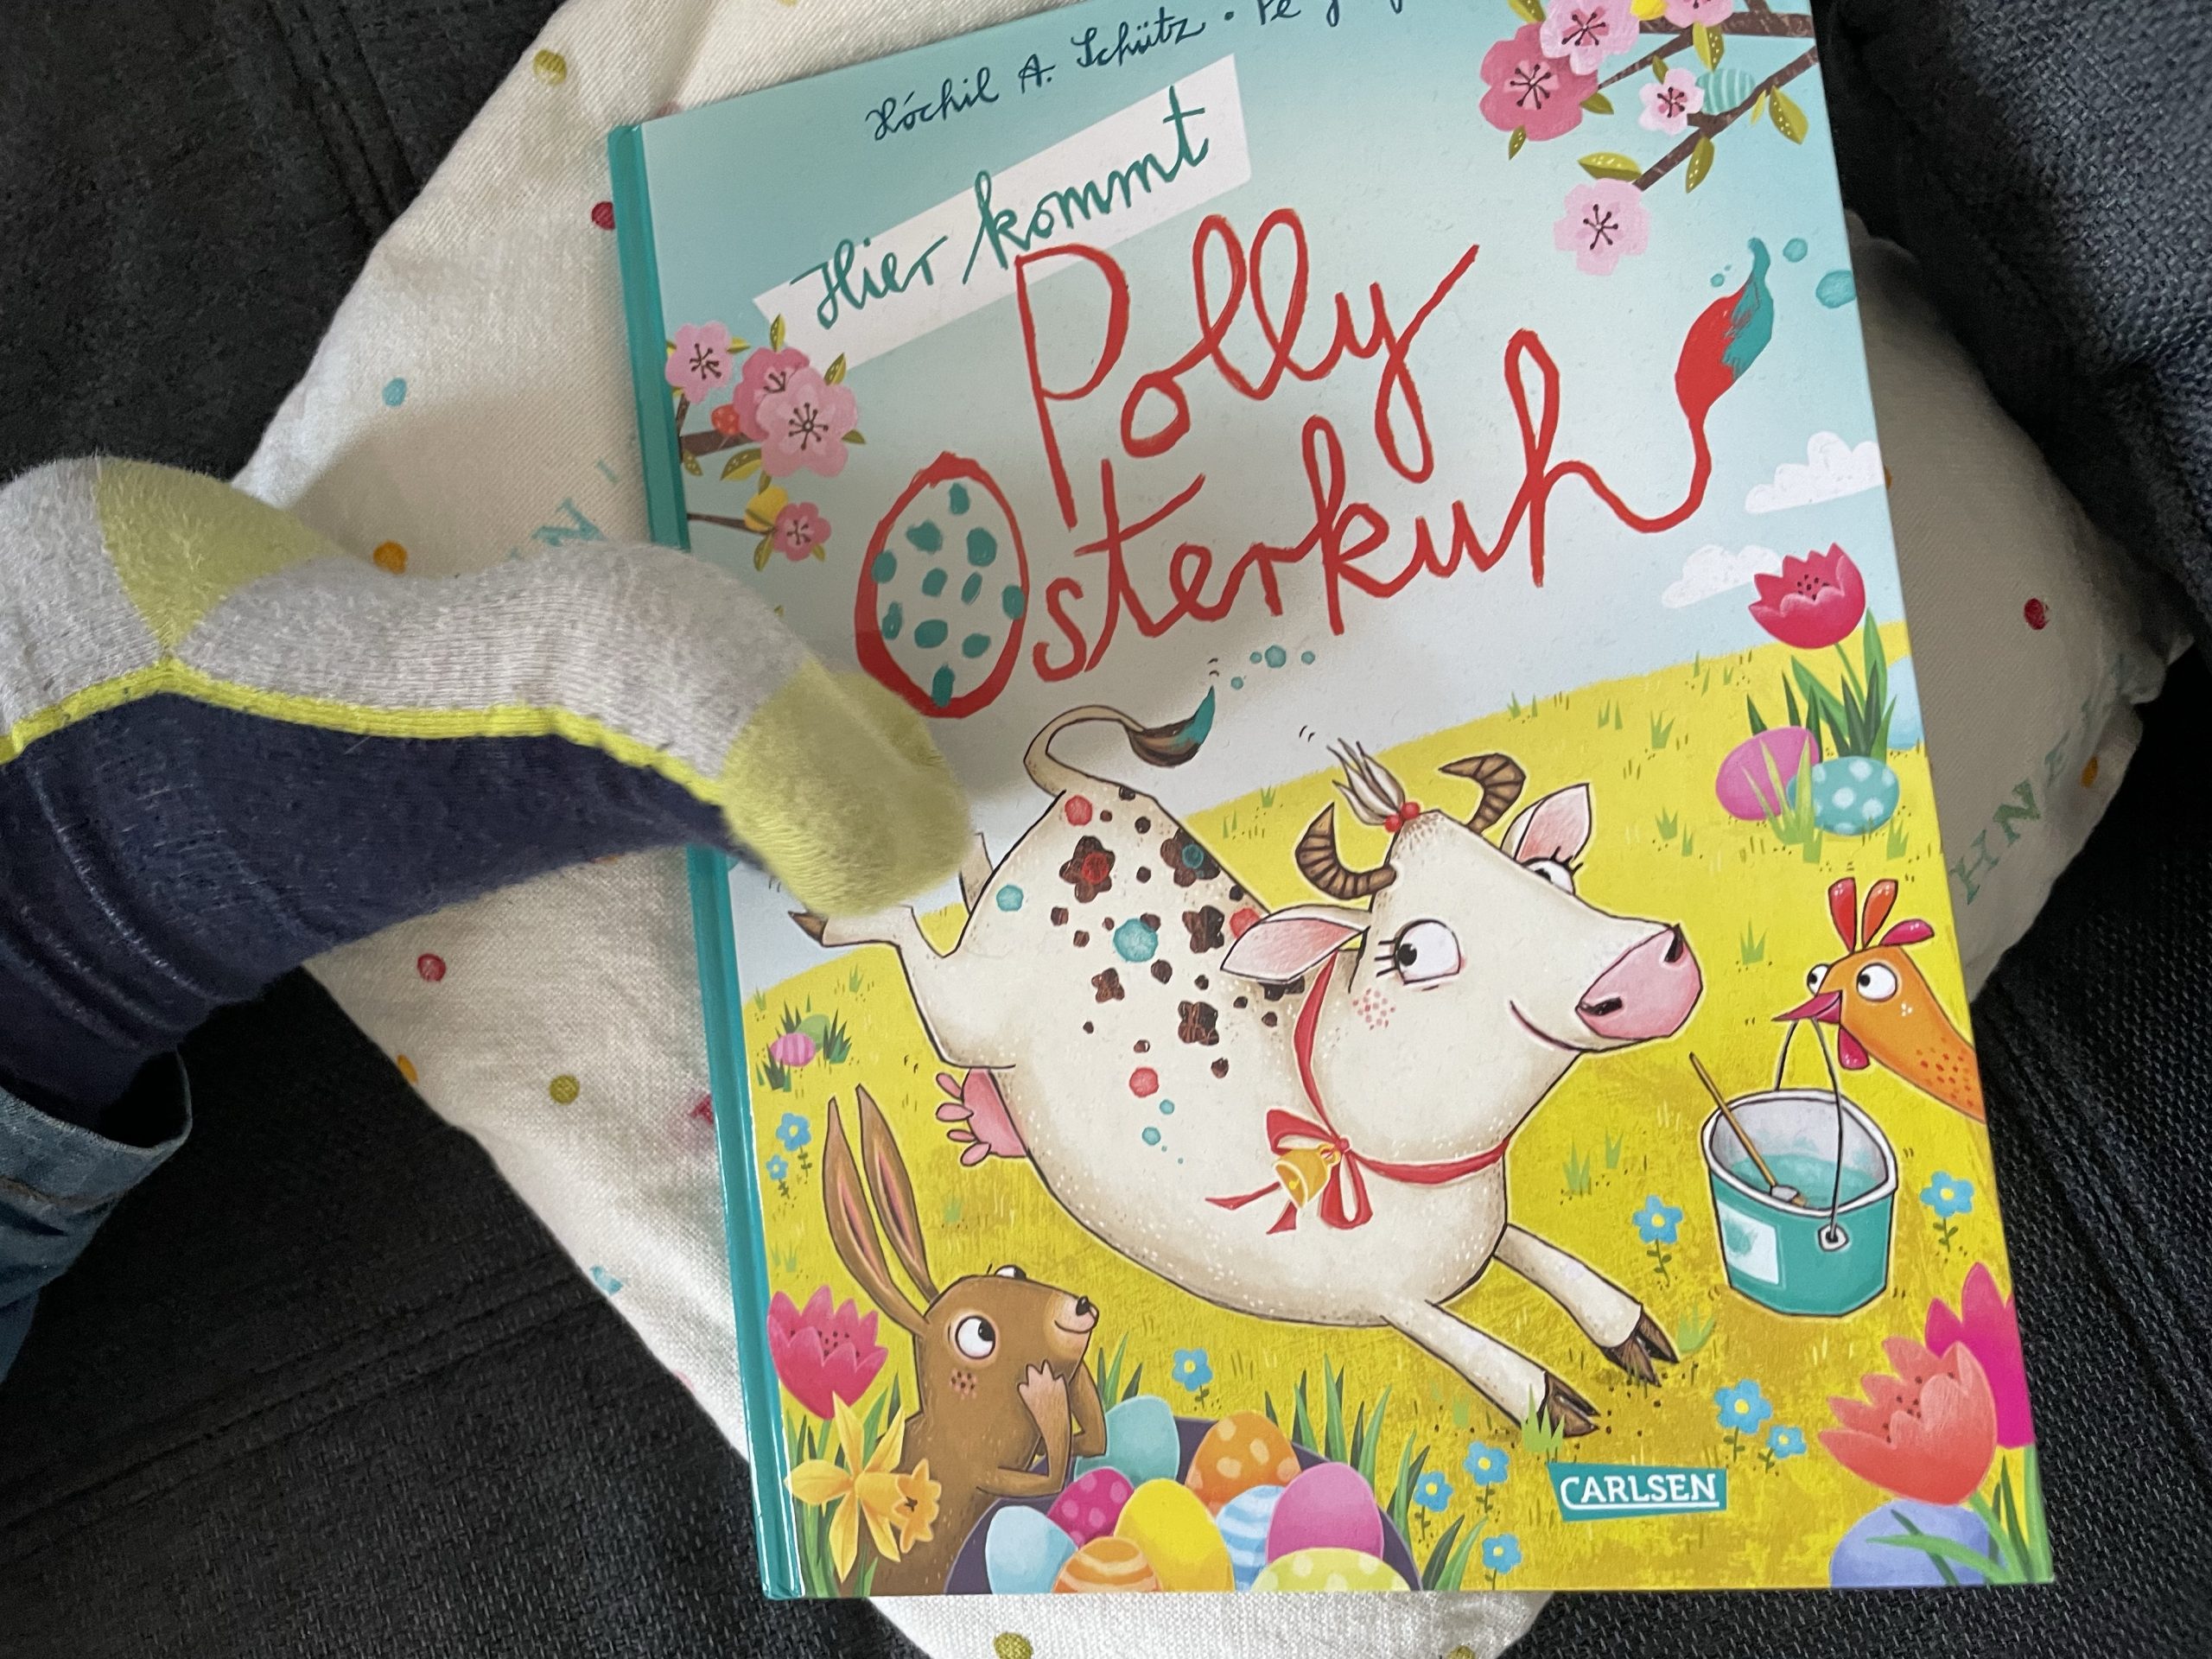 Kinderbuch "Polly Osterkuh" auf dem Sofa mit Kinderfuß